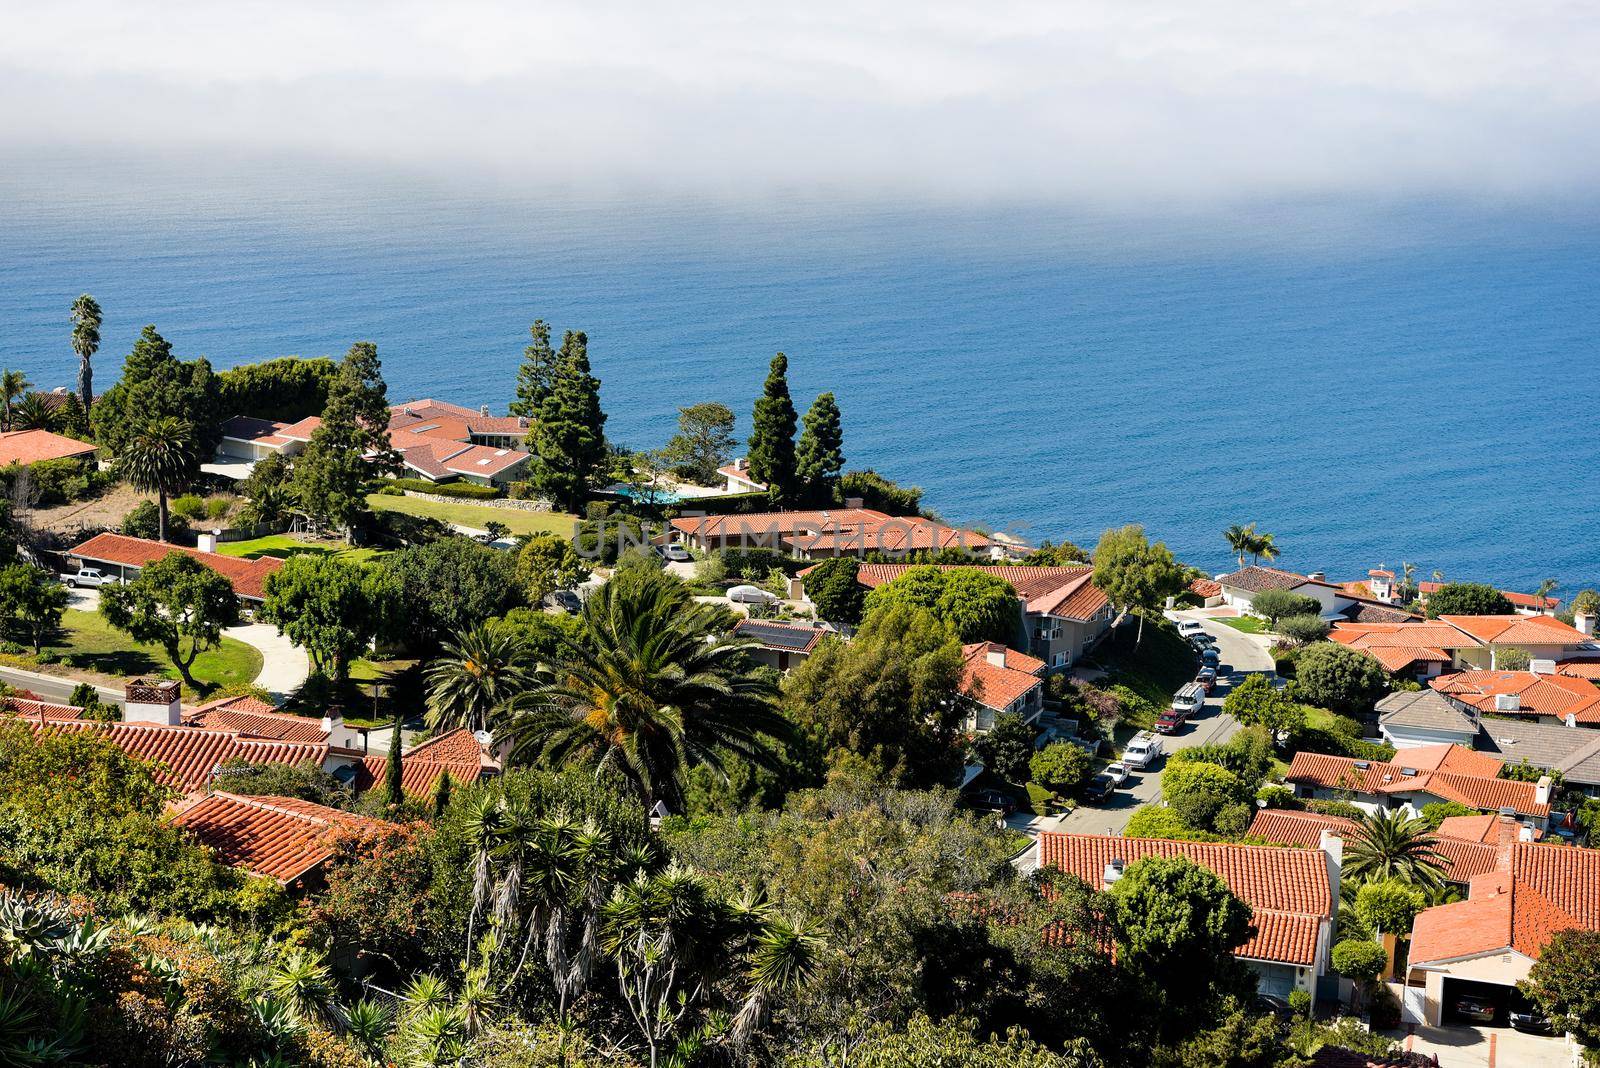 California Rollings Hills Estates California view of Pacific Ocean Los Angeles